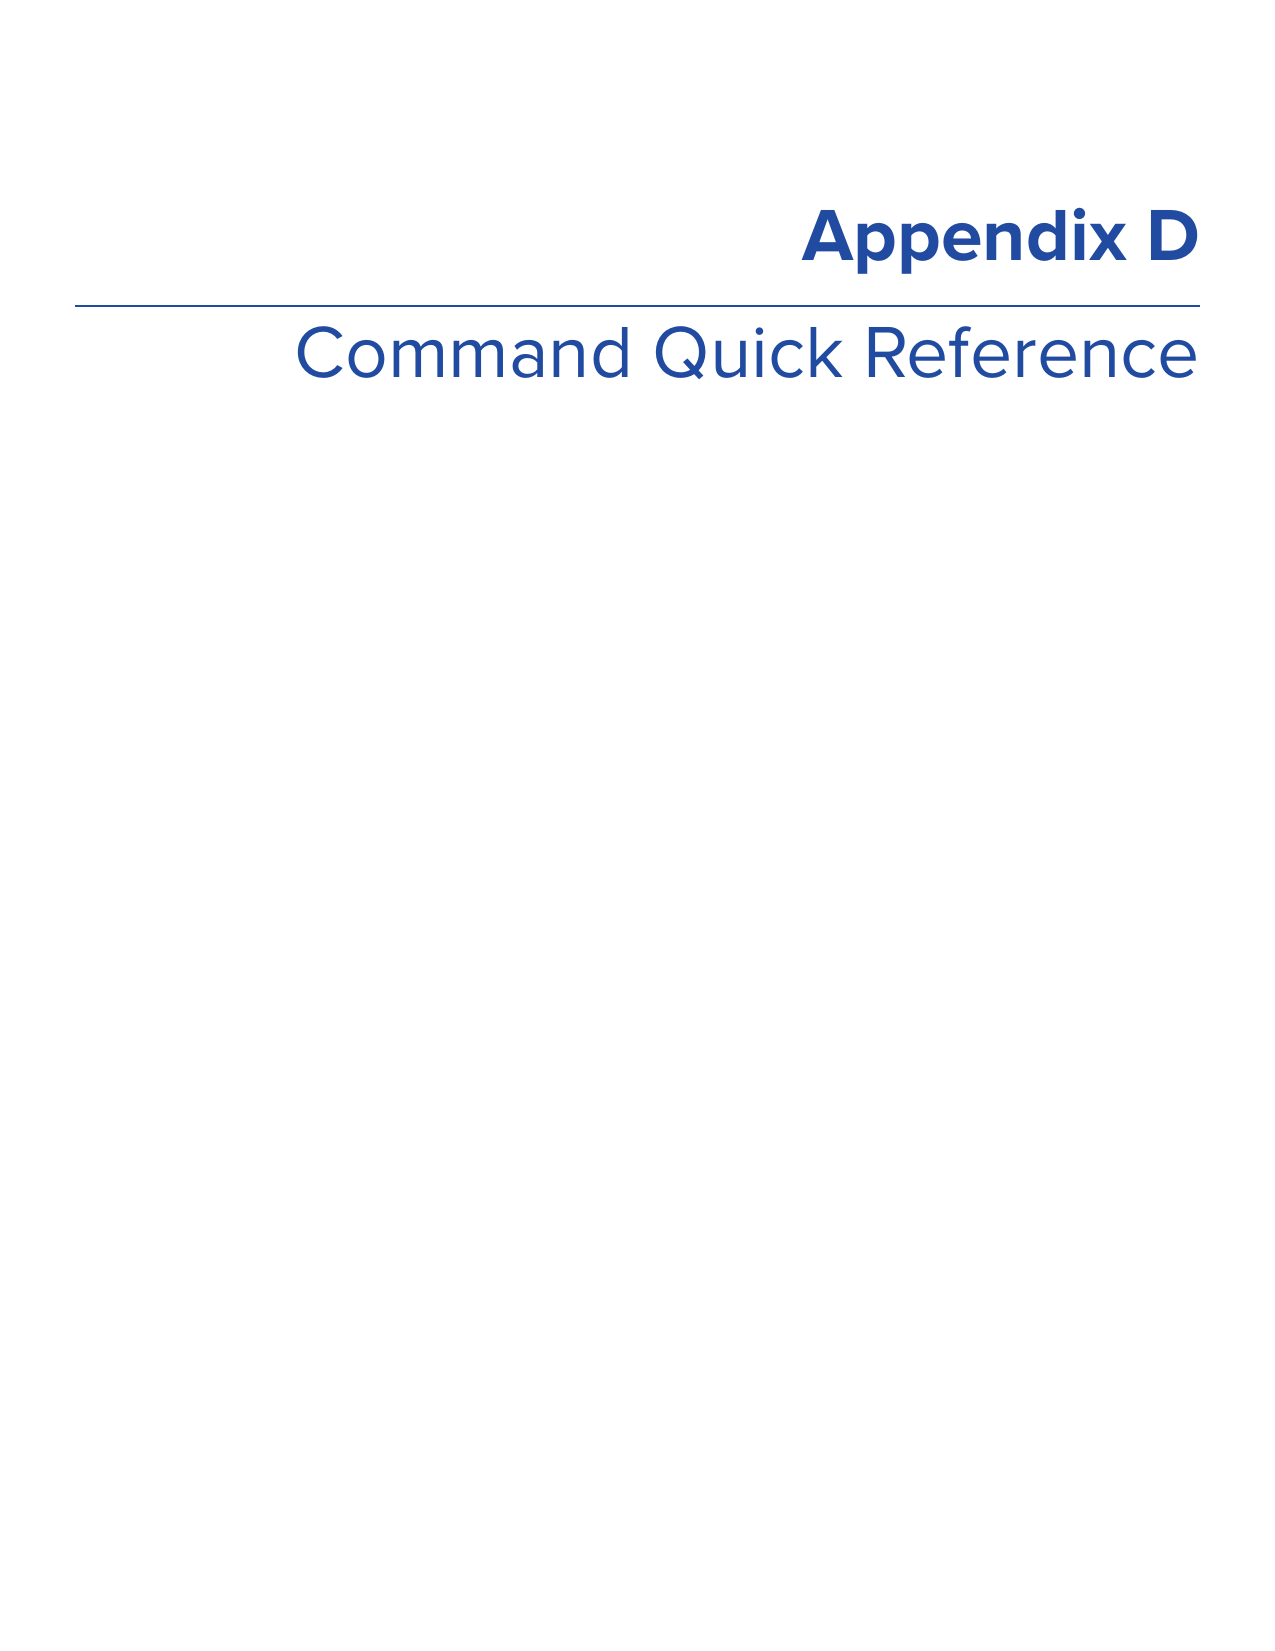 Command Quick ReferenceAppendix D